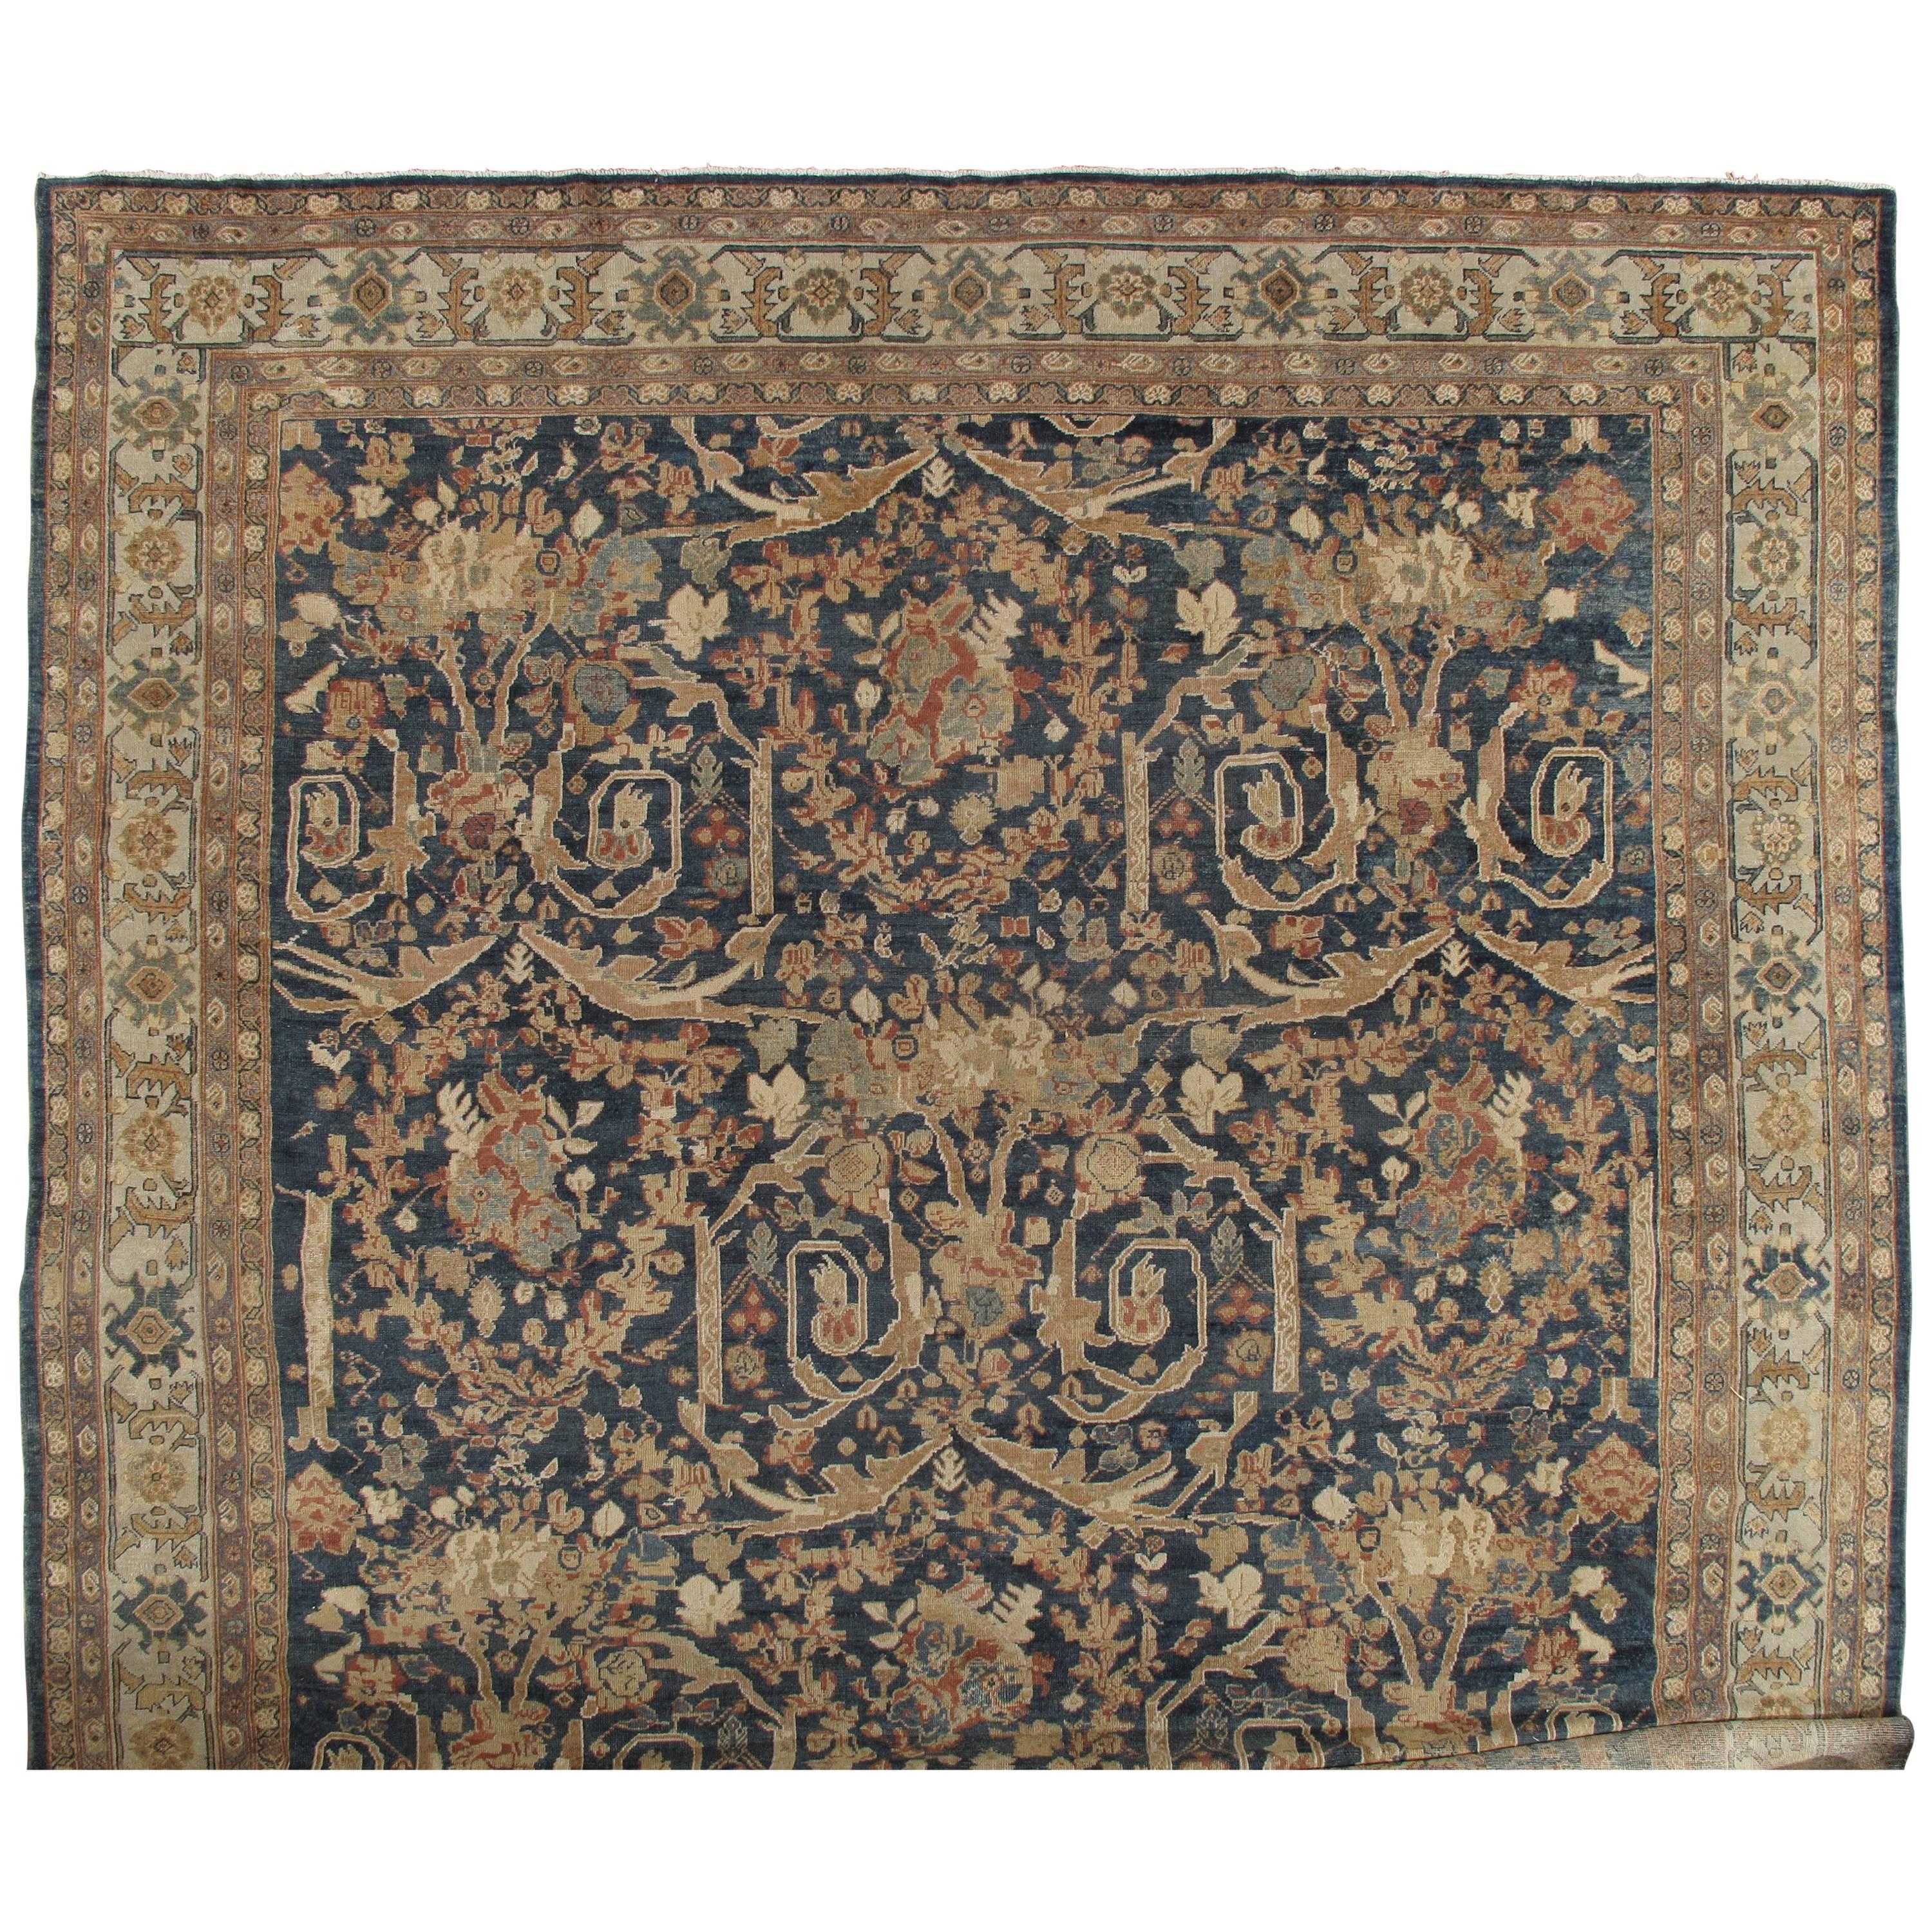 Antique Sultanabad Carpet, Persian Handmade Wool Rug, Soft Navy, Light Blue Ivor